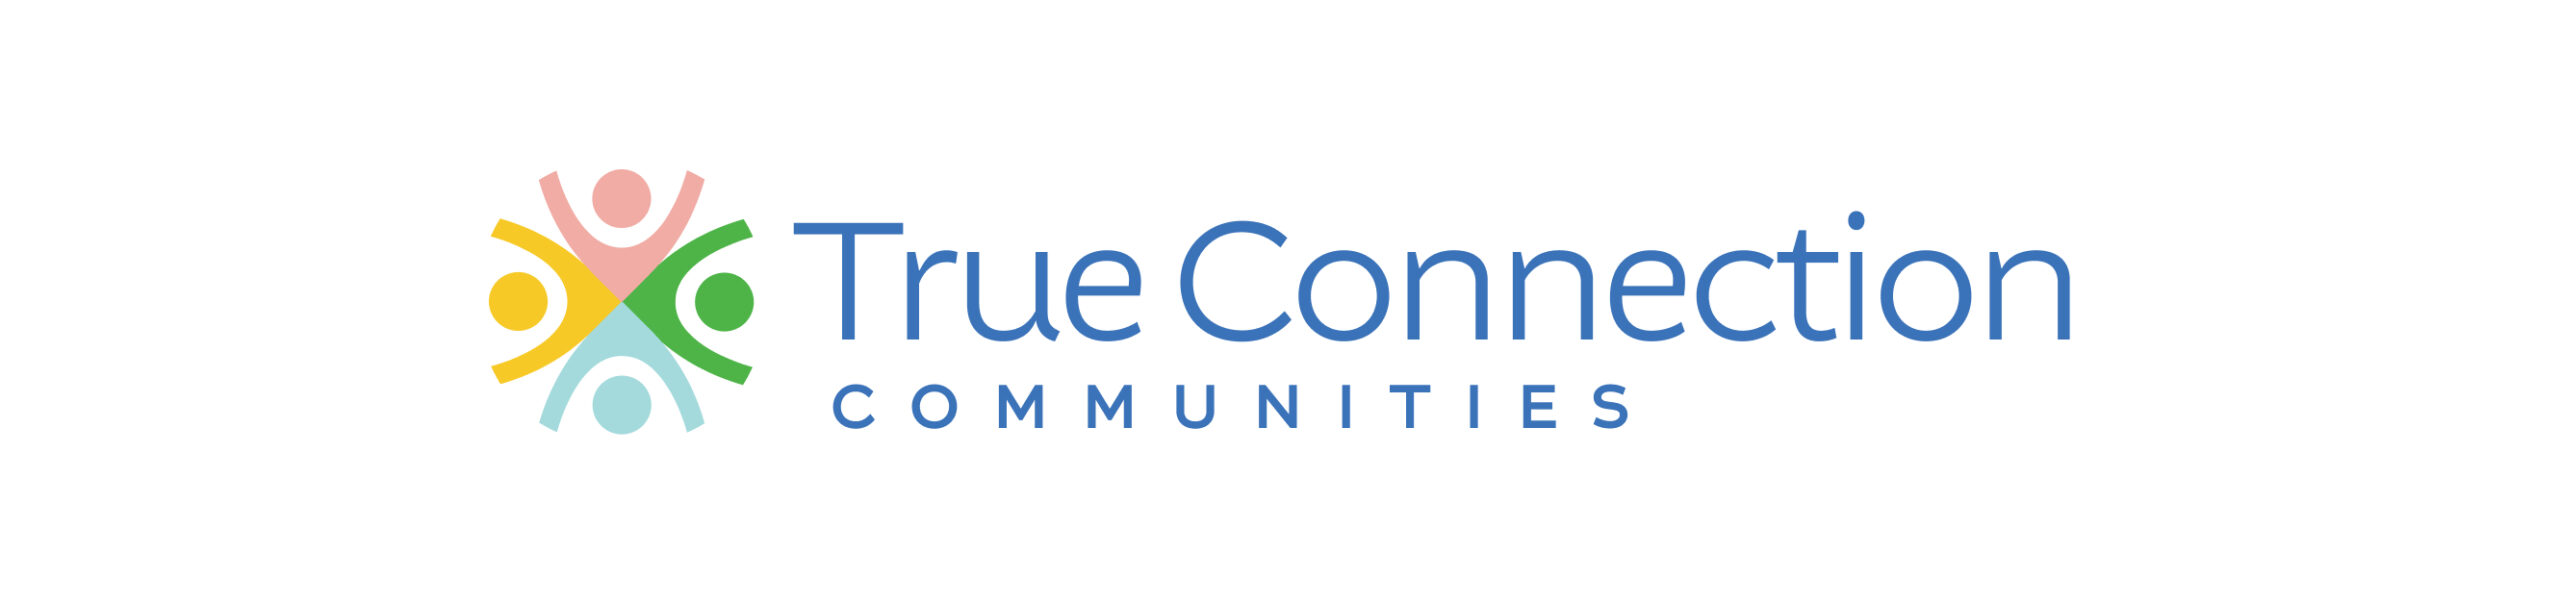 True Connection Communities Case Study - Logo